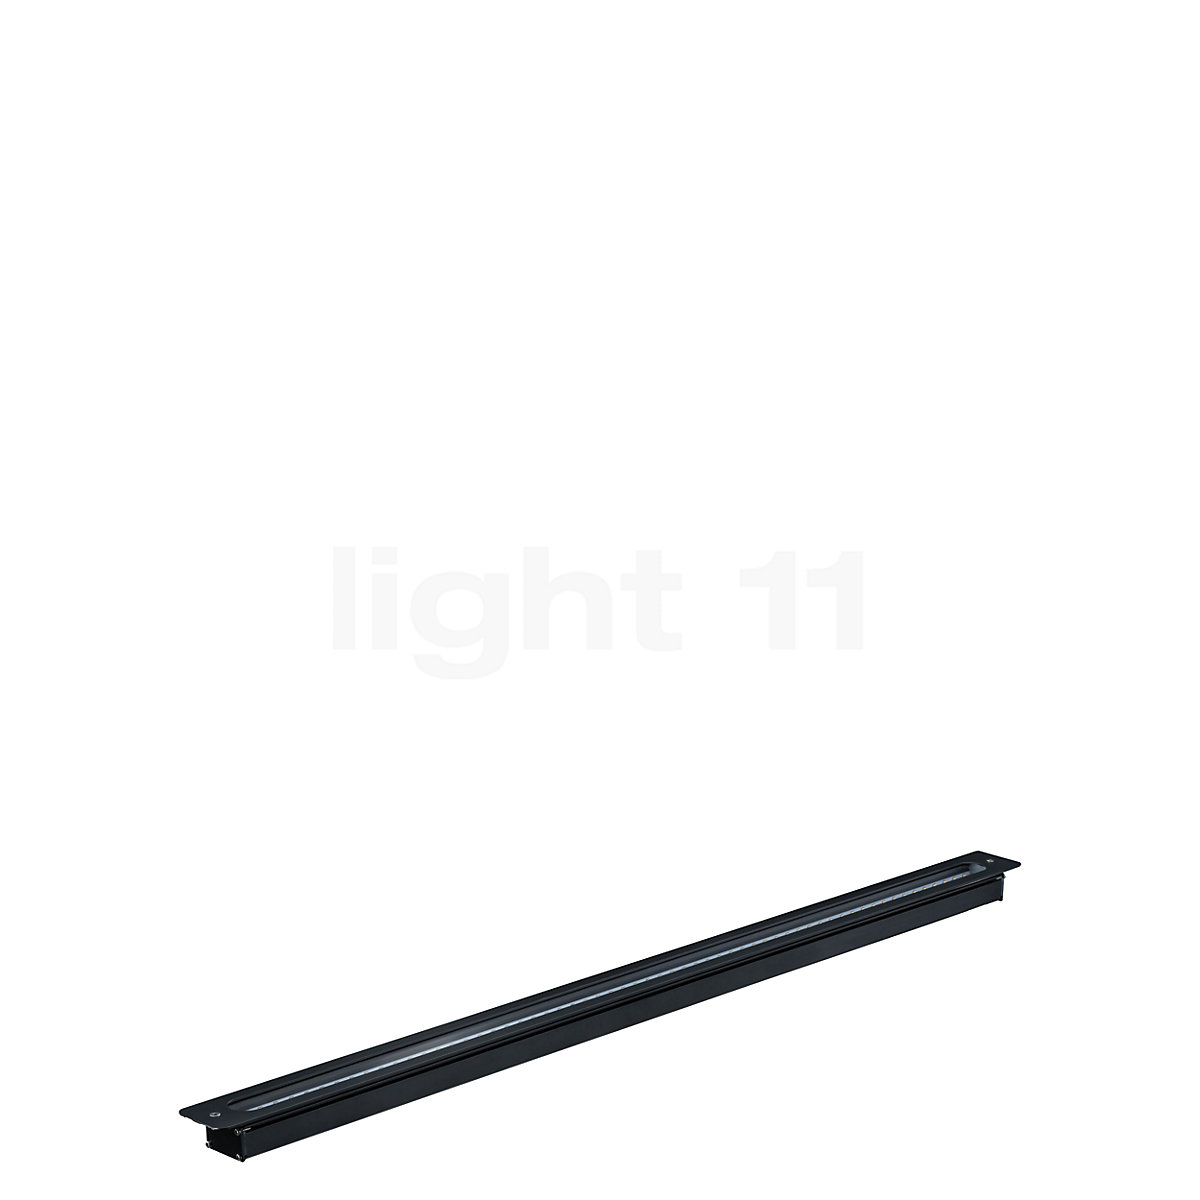 Buy Paulmann Plug & Shine Light Bar recessed Floor Light LED at